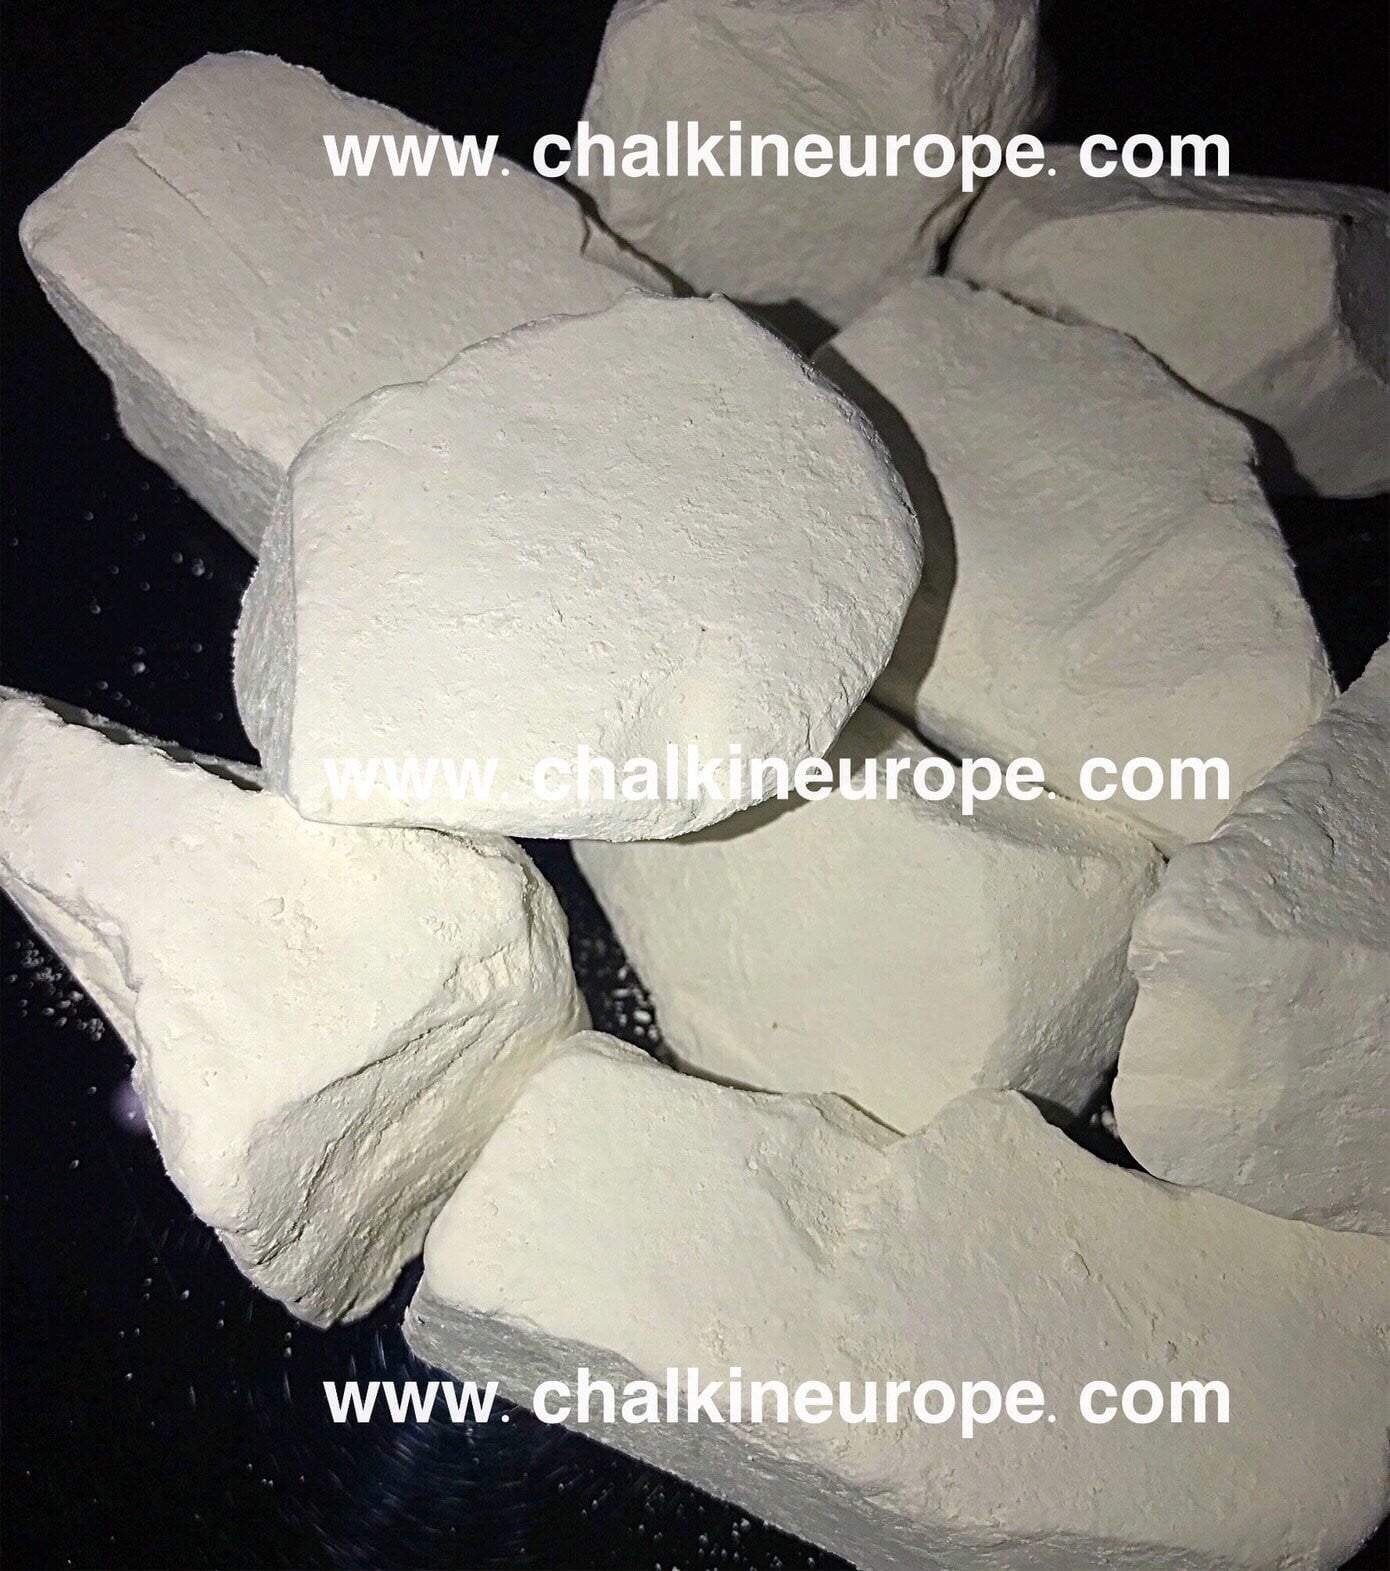 KRAM Edible Chalk Chunks (lump) Natural for Eating (Food), 1 lb (450 g)